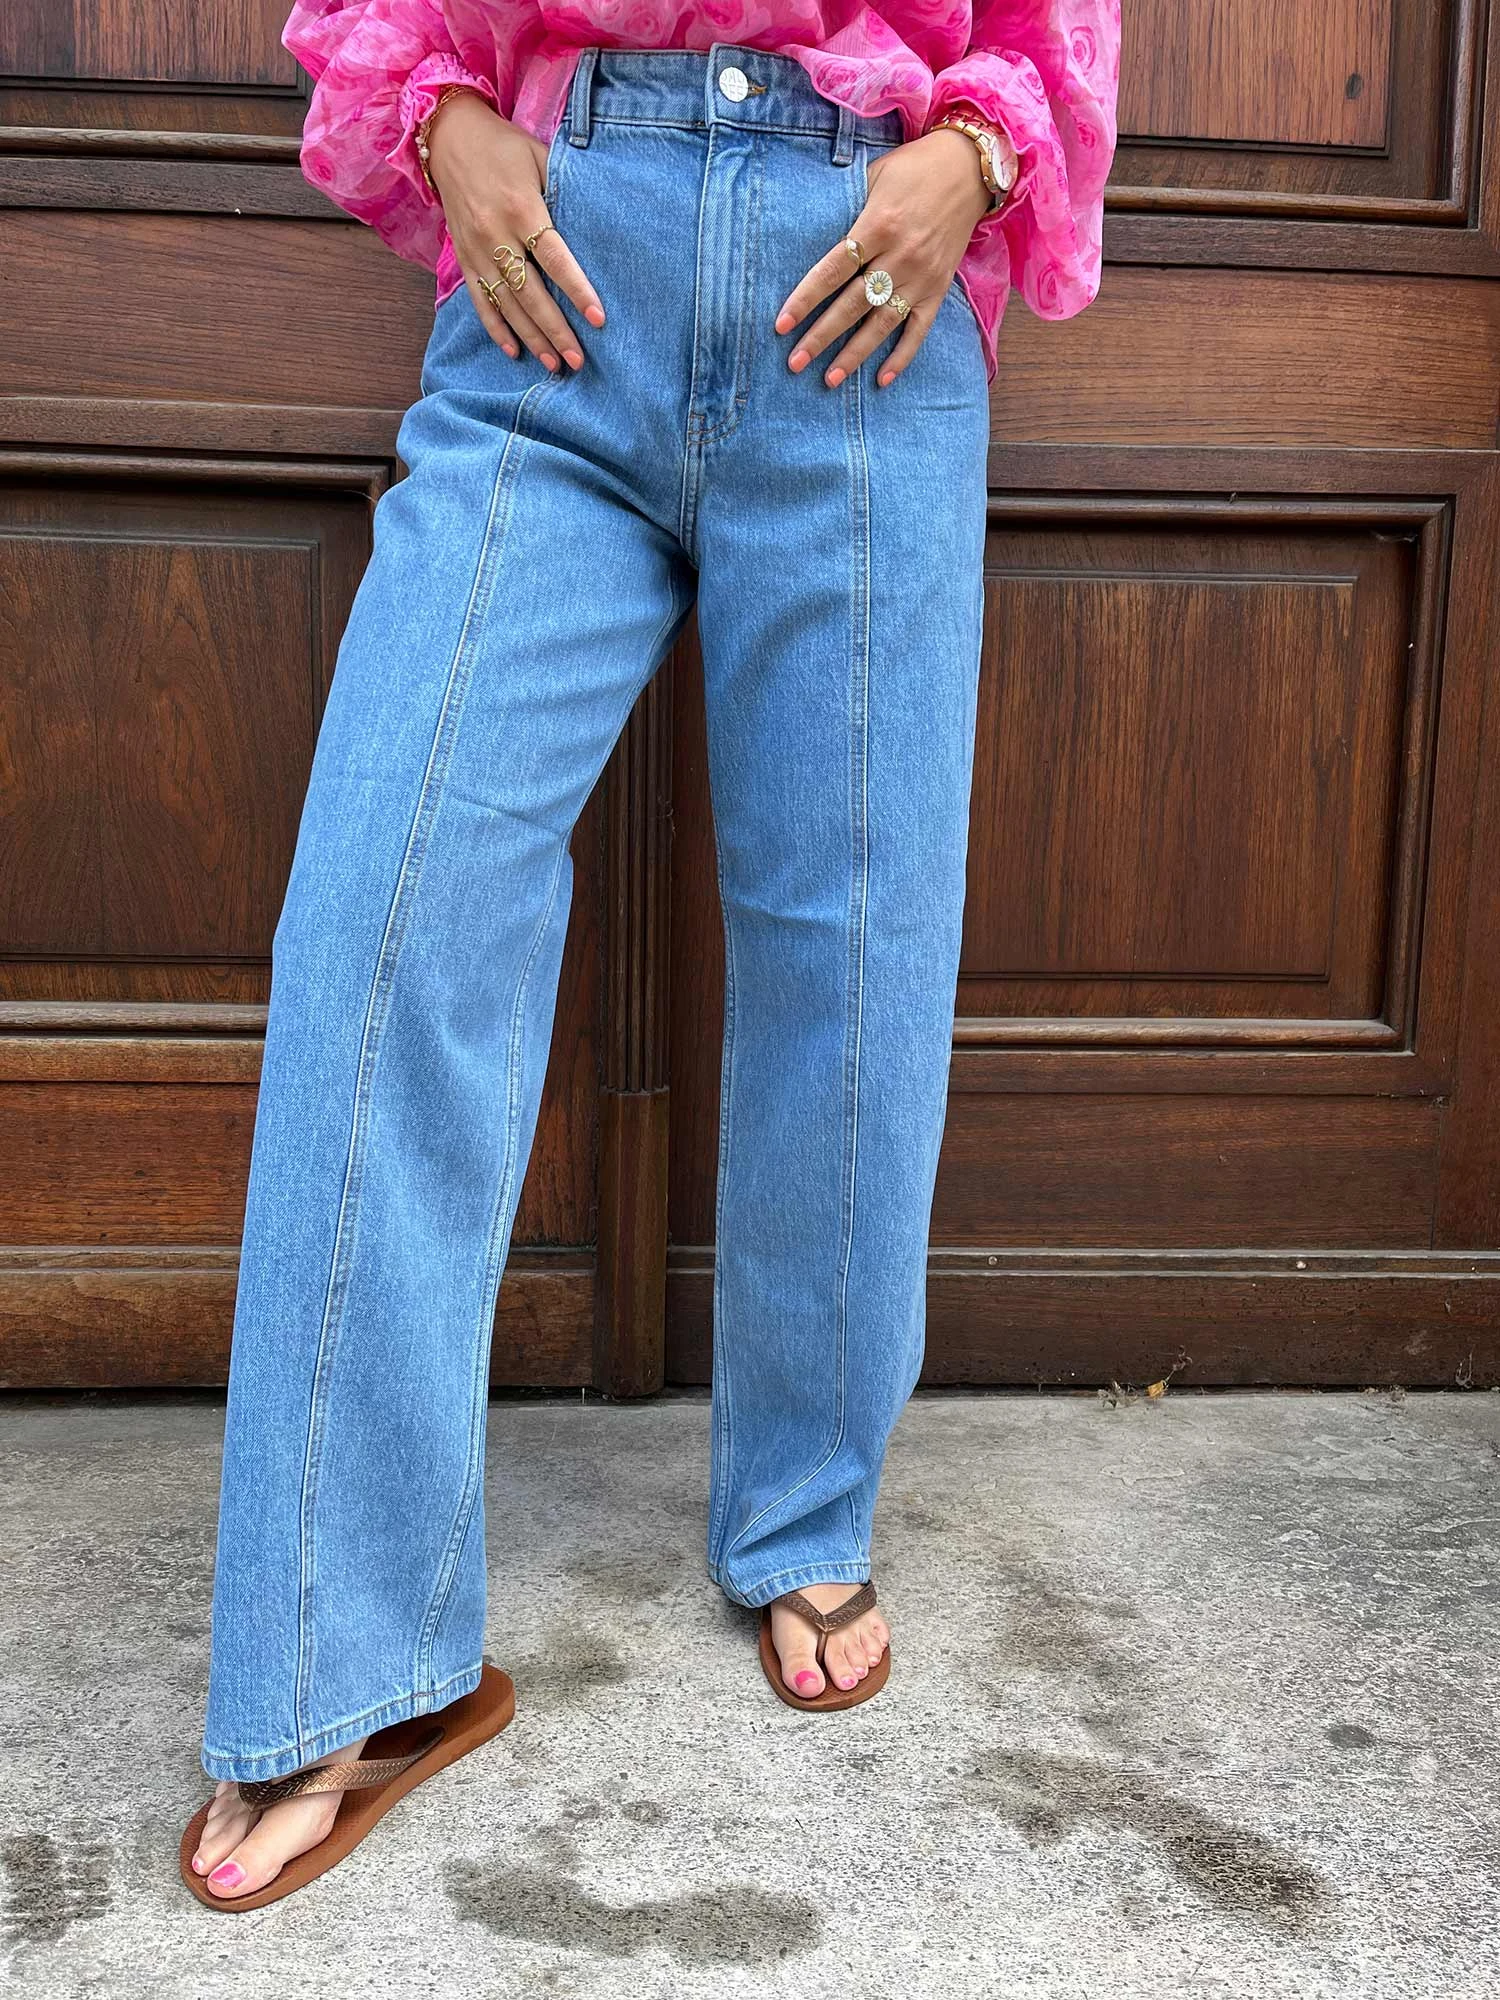 und Pferdgarten Nara Jeans | Shop de fedeste online